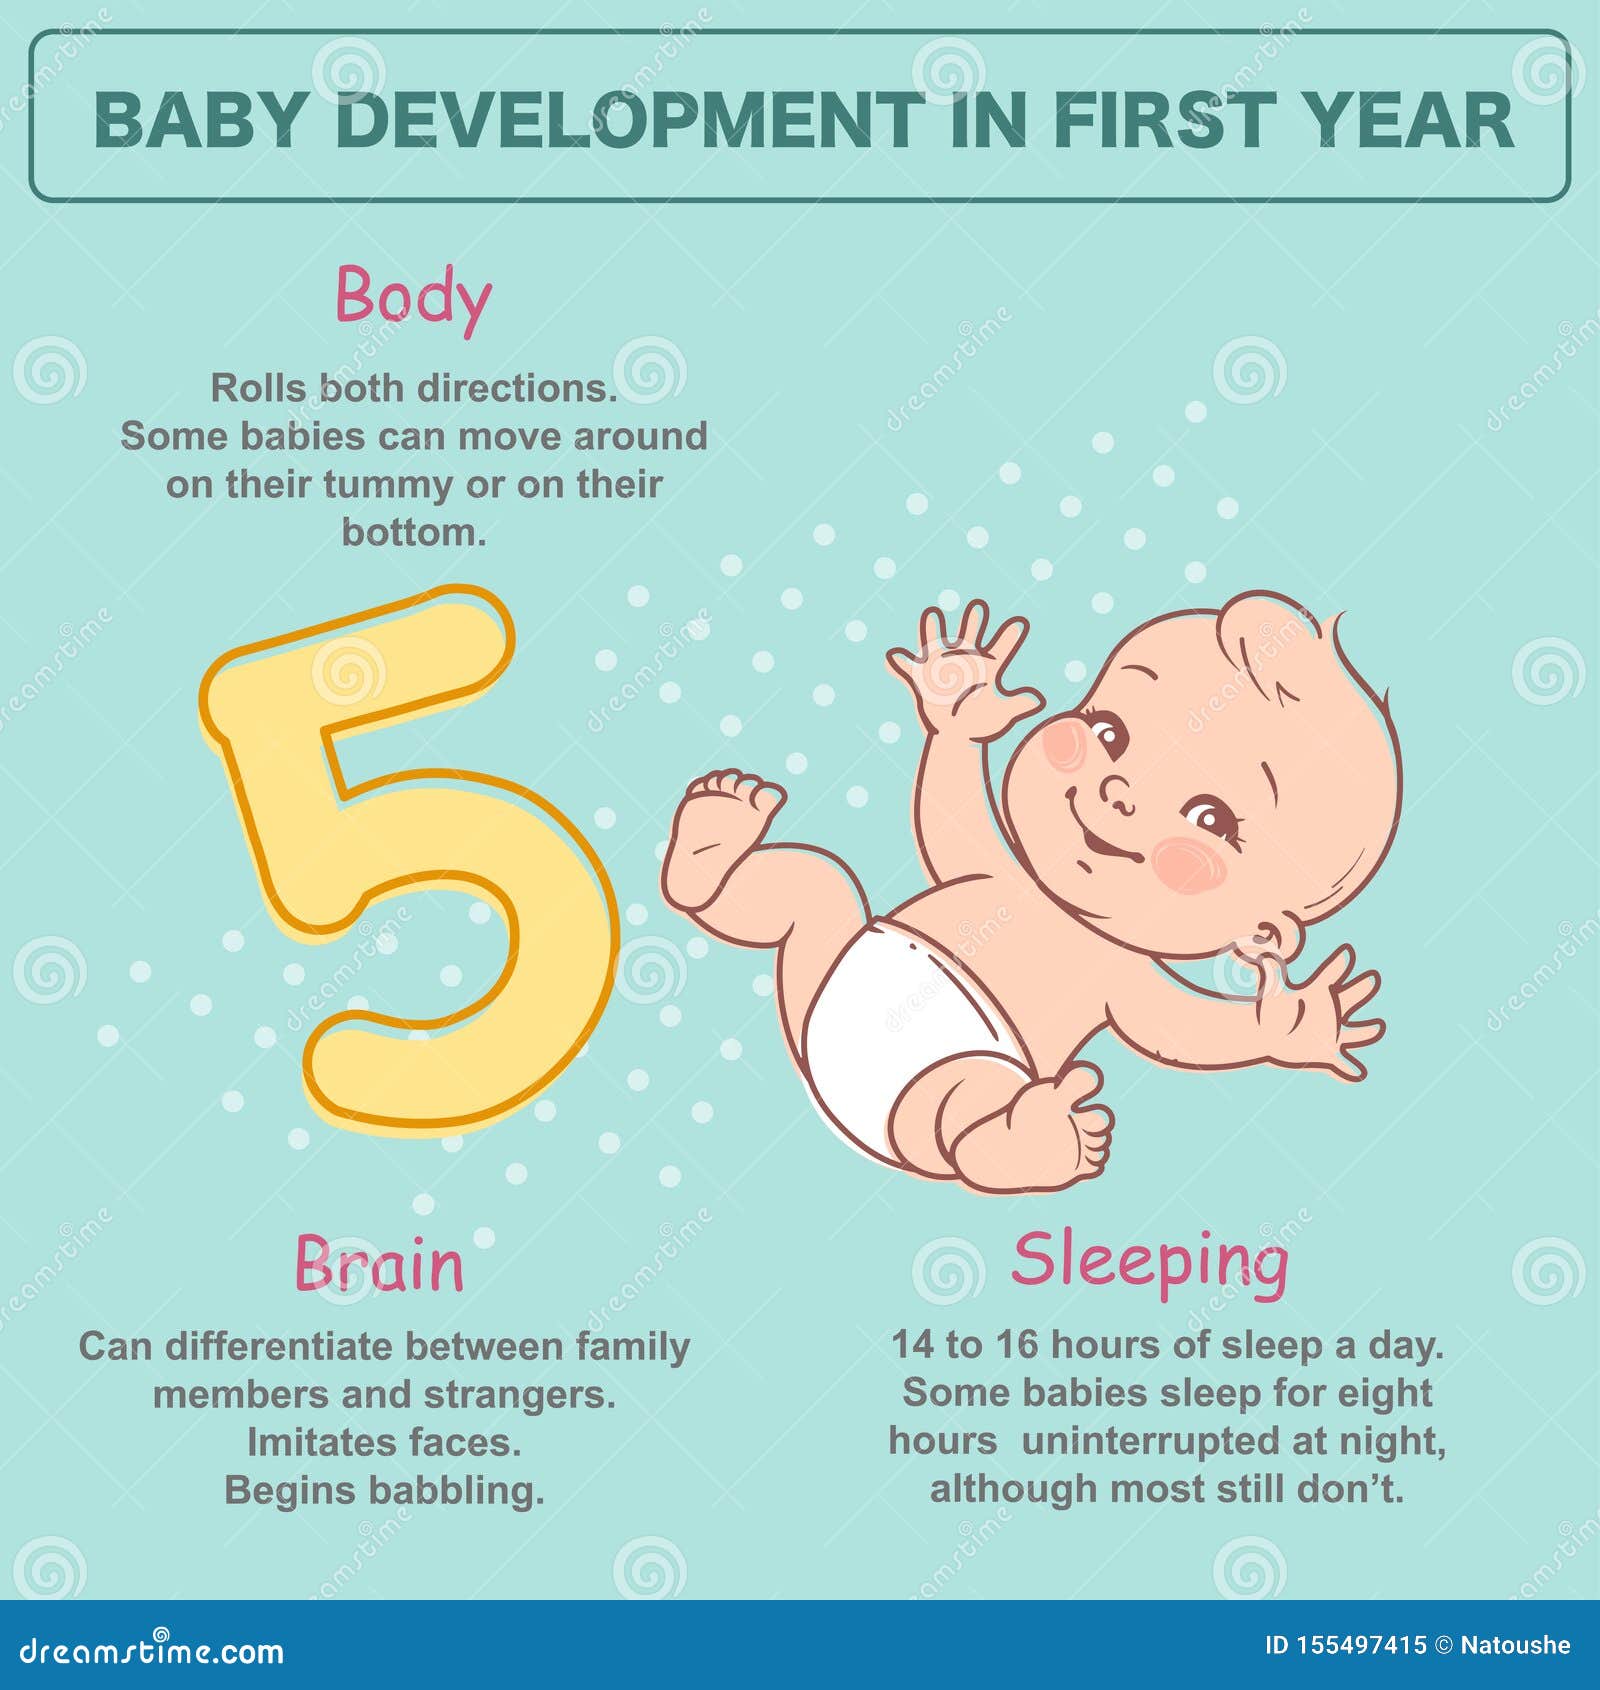 5th month baby development